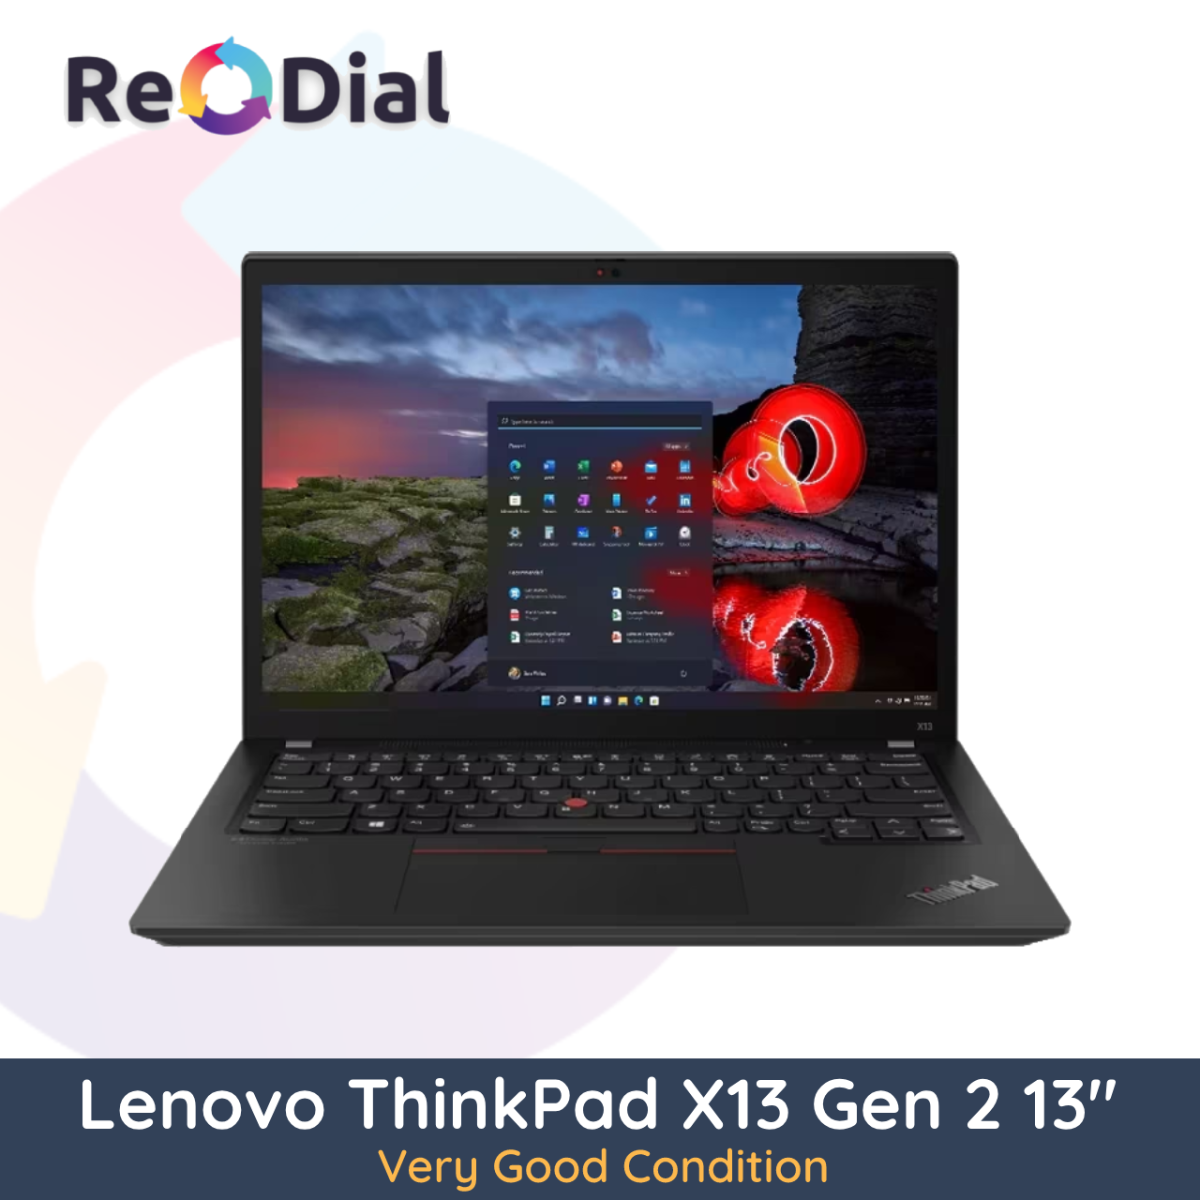 Lenovo ThinkPad X13 Gen 2 13" Laptop i5-1145G7 256GB 16GB RAM - Very Good Condition